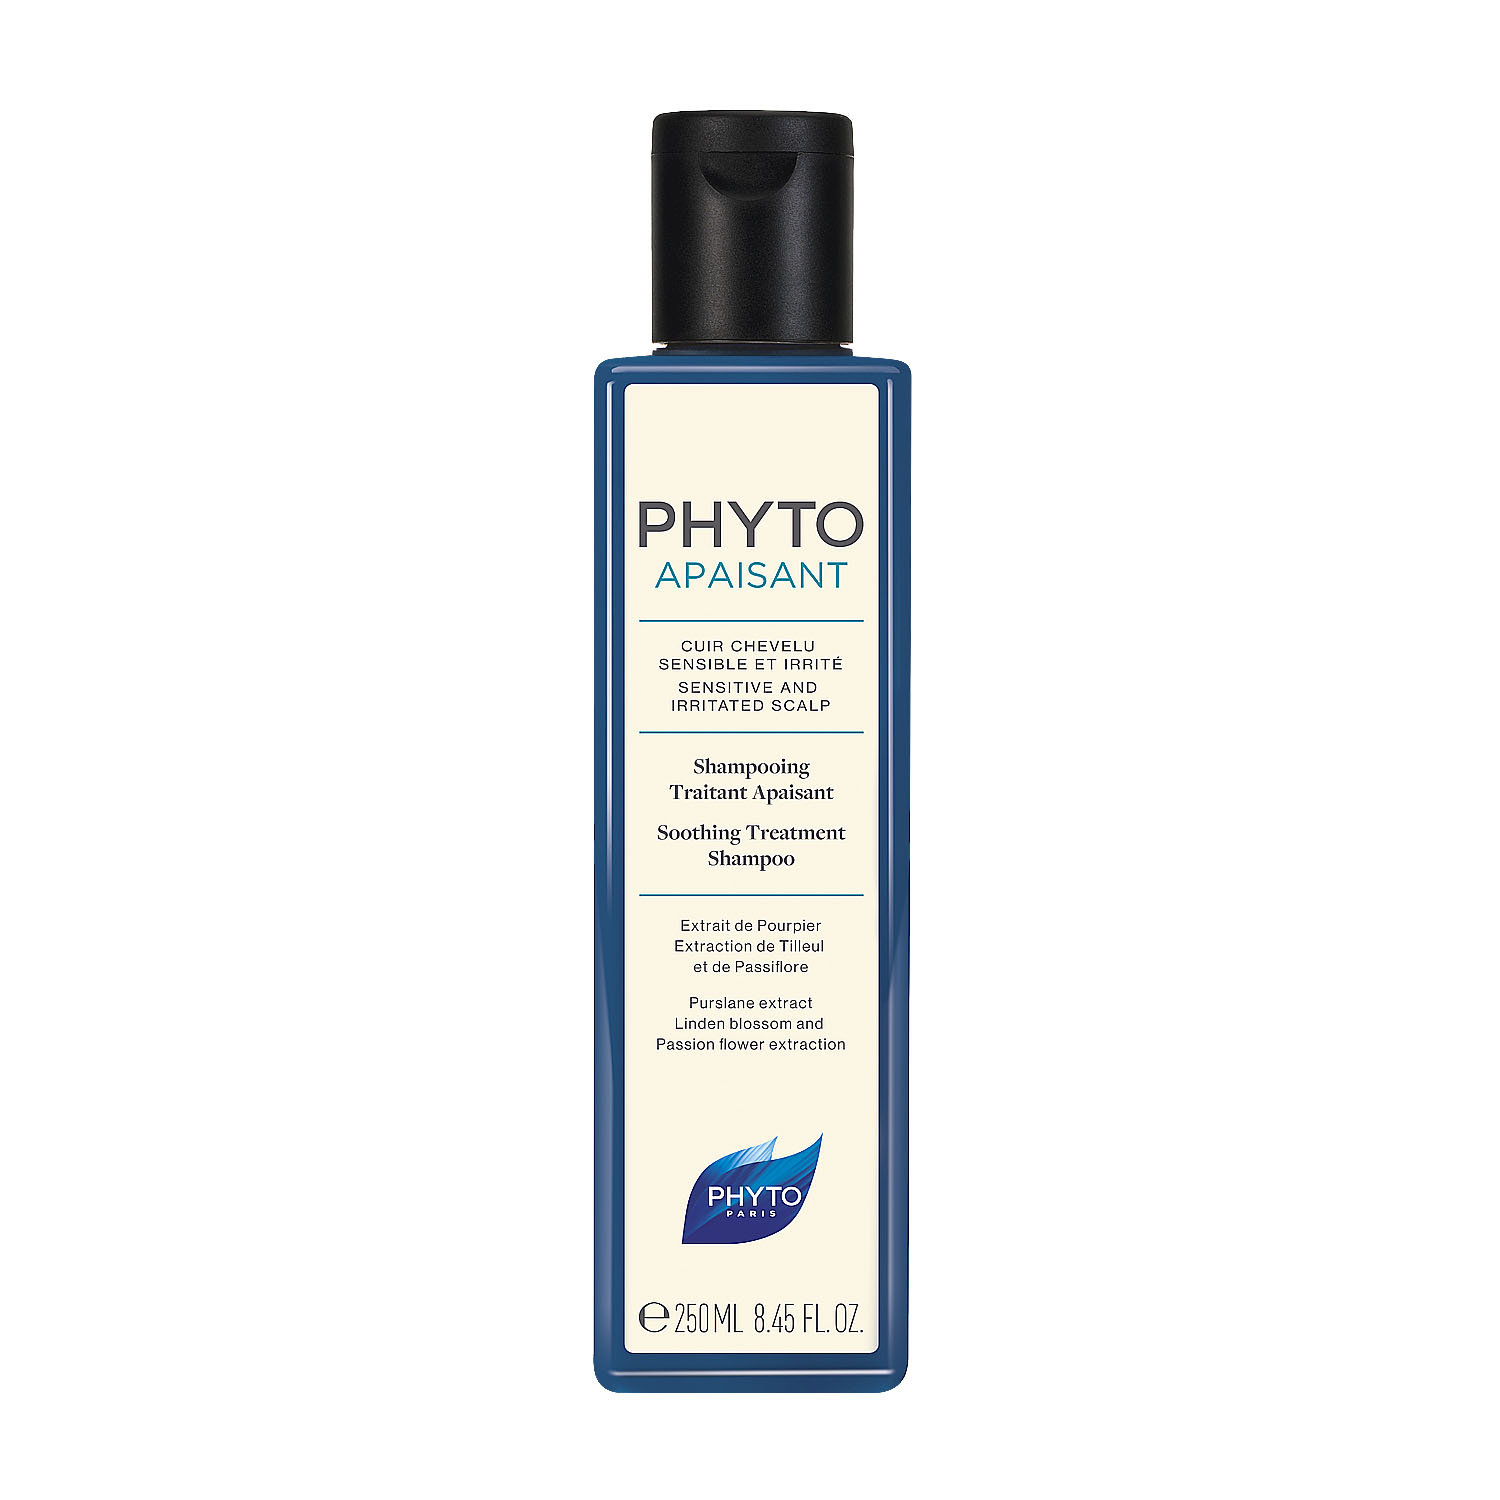 Phytosolba Phytoapaisant шампунь оздоравливающий успокаивающий 250мл шампунь для волос оздоравливающий успокаивающий phytoapaisant shampooing traitant apaisant 250мл